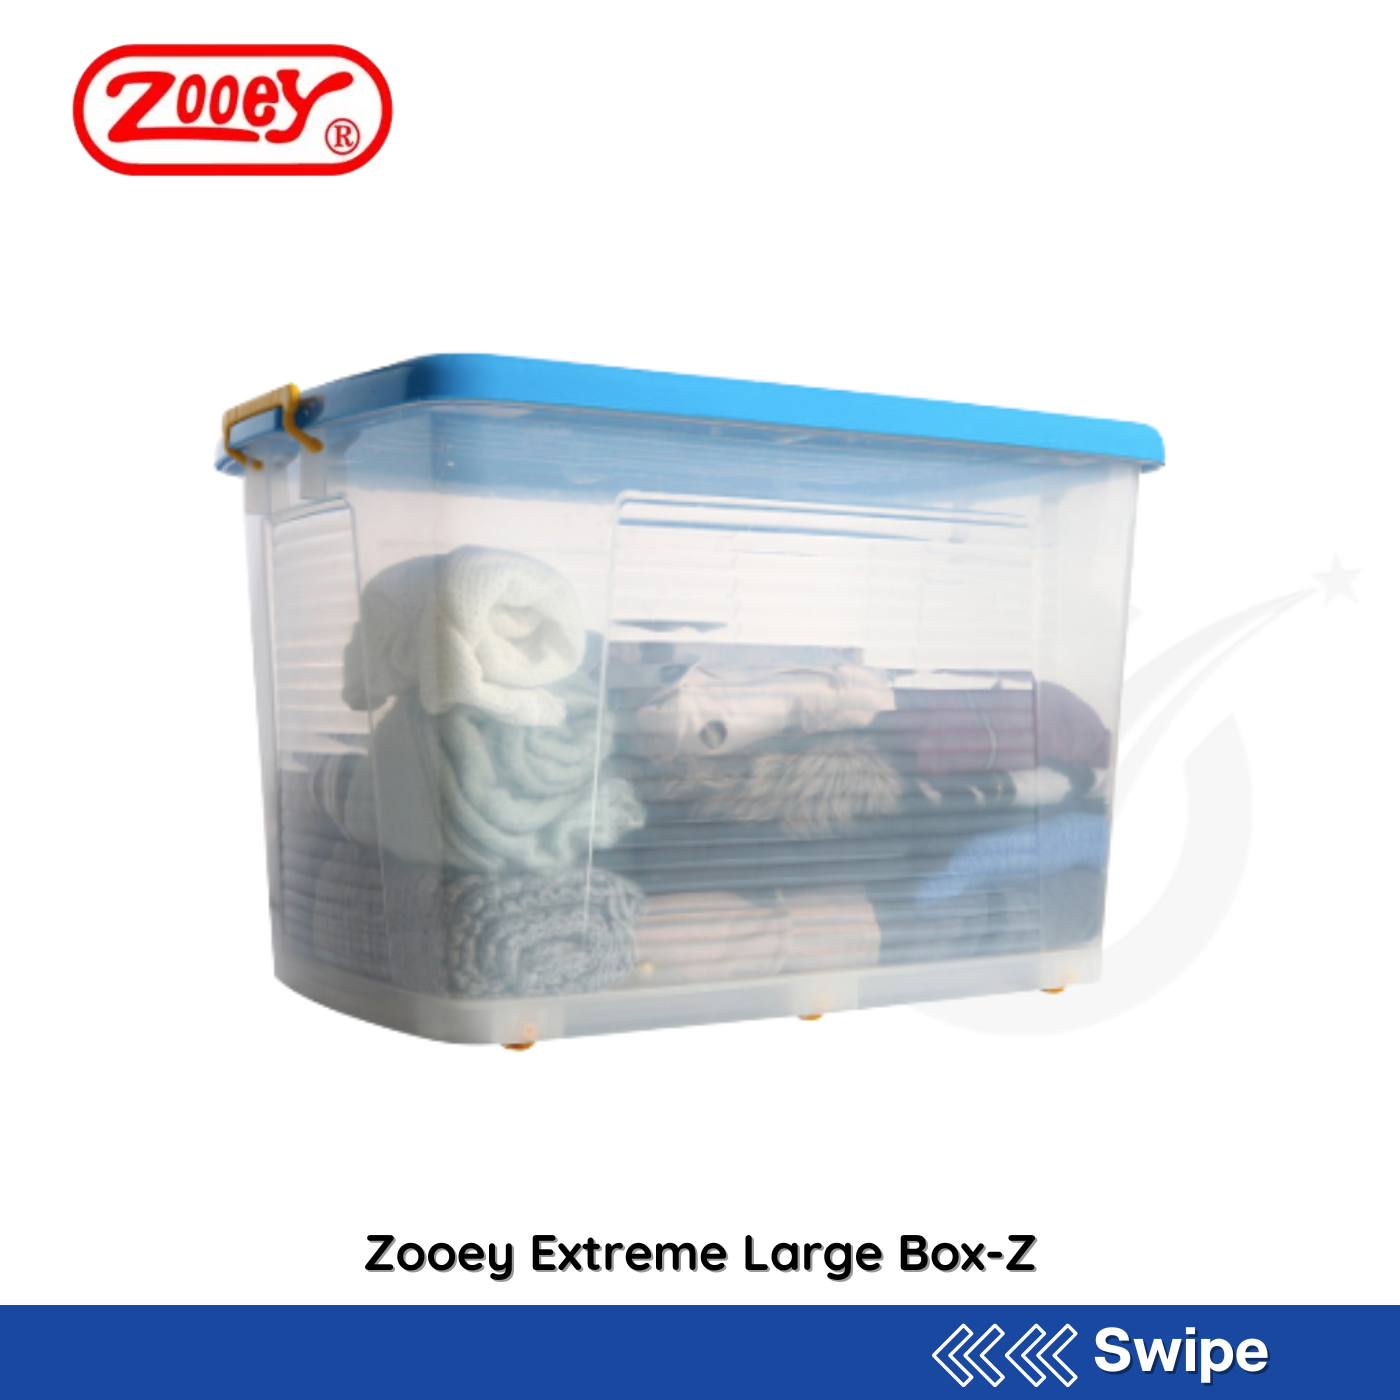 Zooey Extreme Large Box-Z - People's Choice Marketing